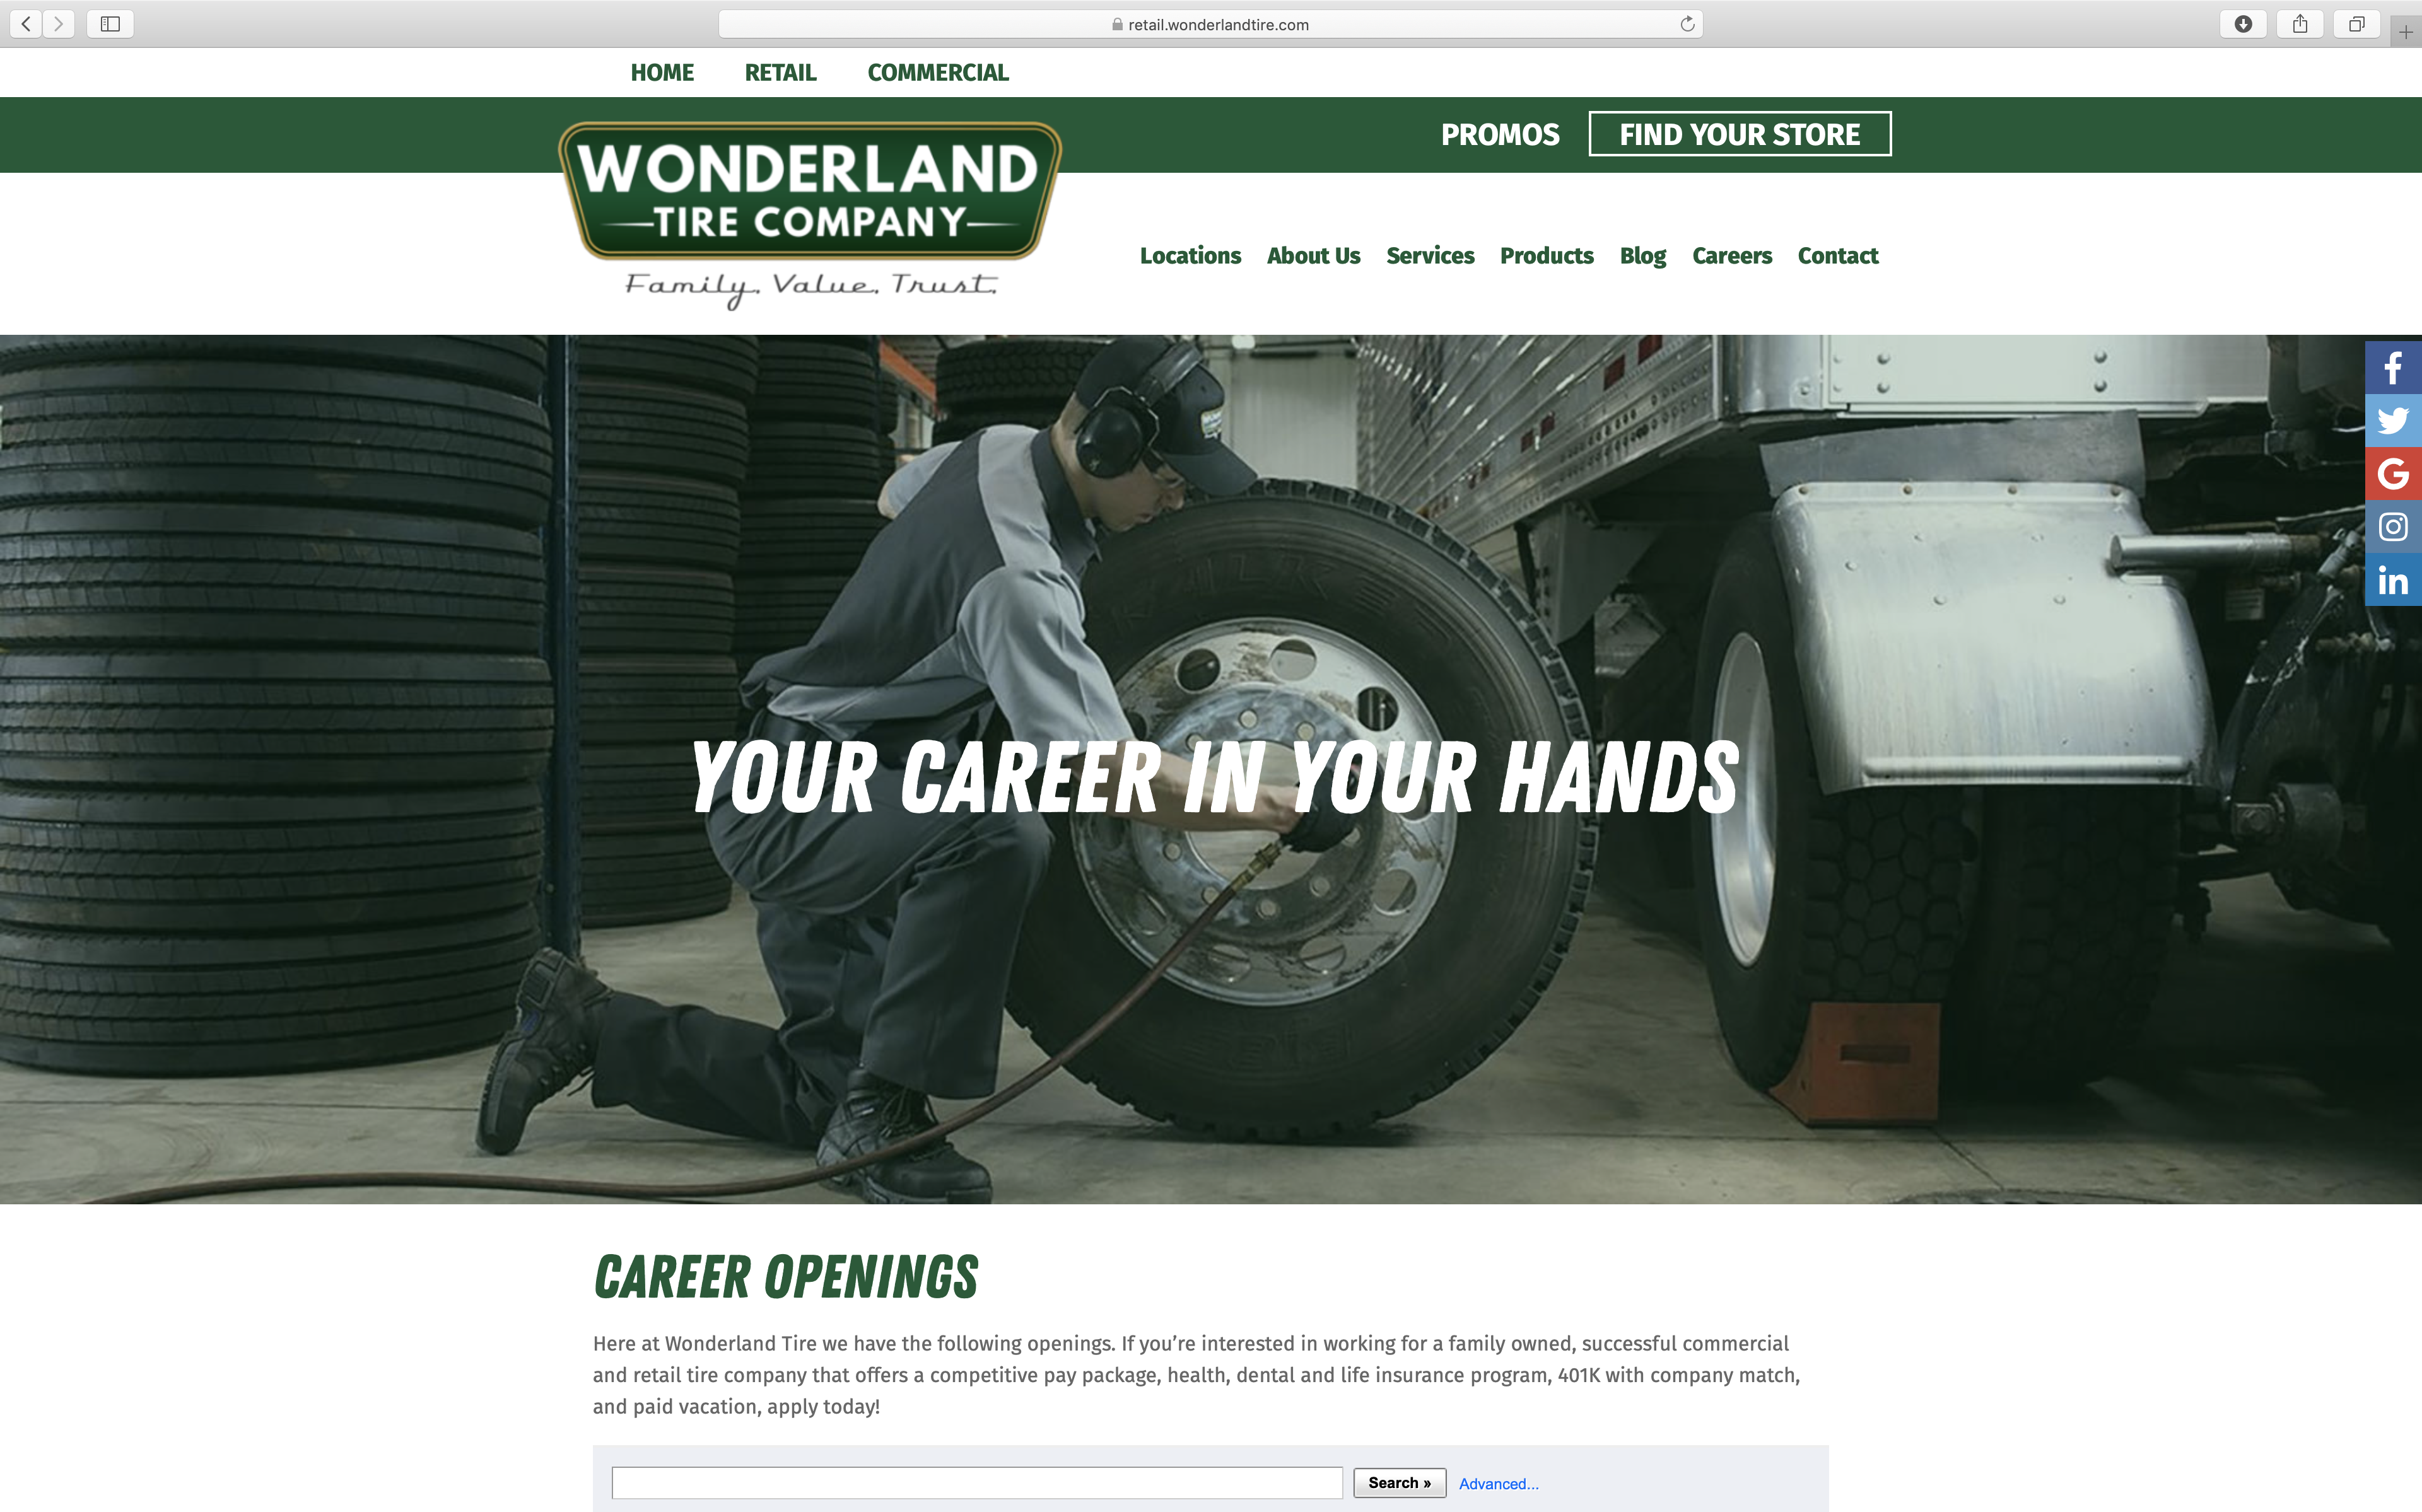 online job application functionality on wonderland tire website